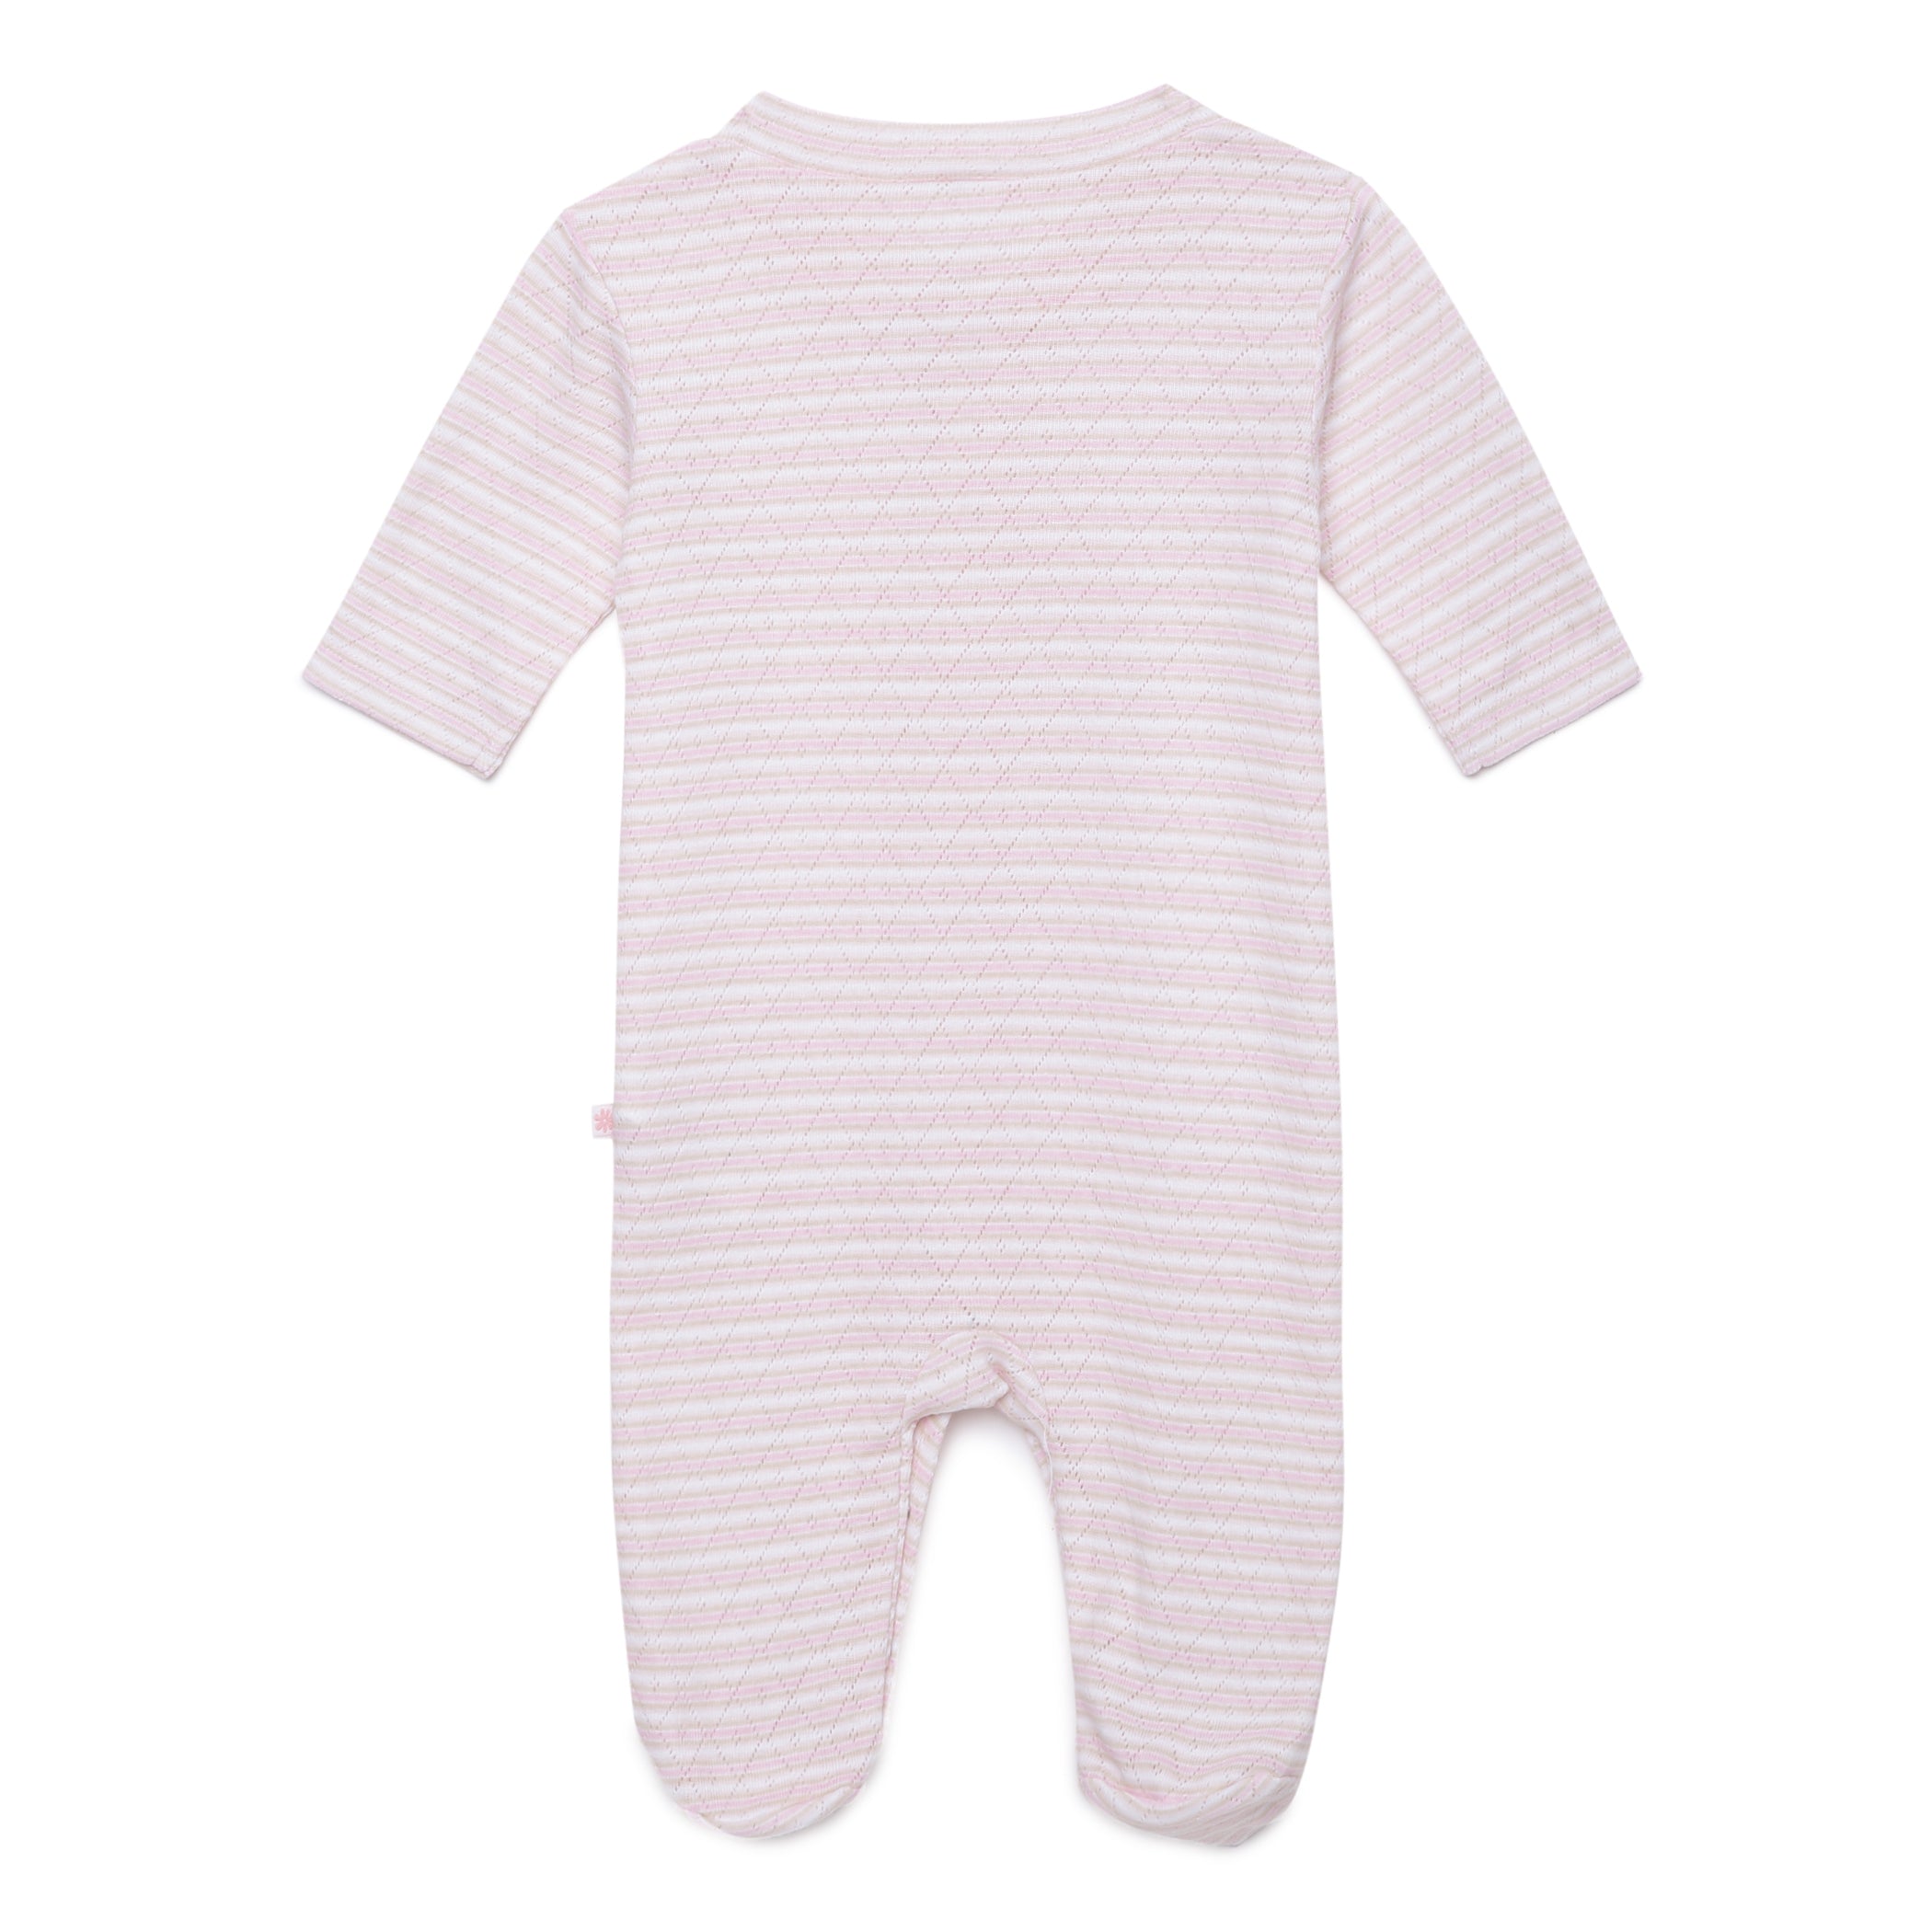 Babies Classic Striped Full Sleeve Sleepsuit